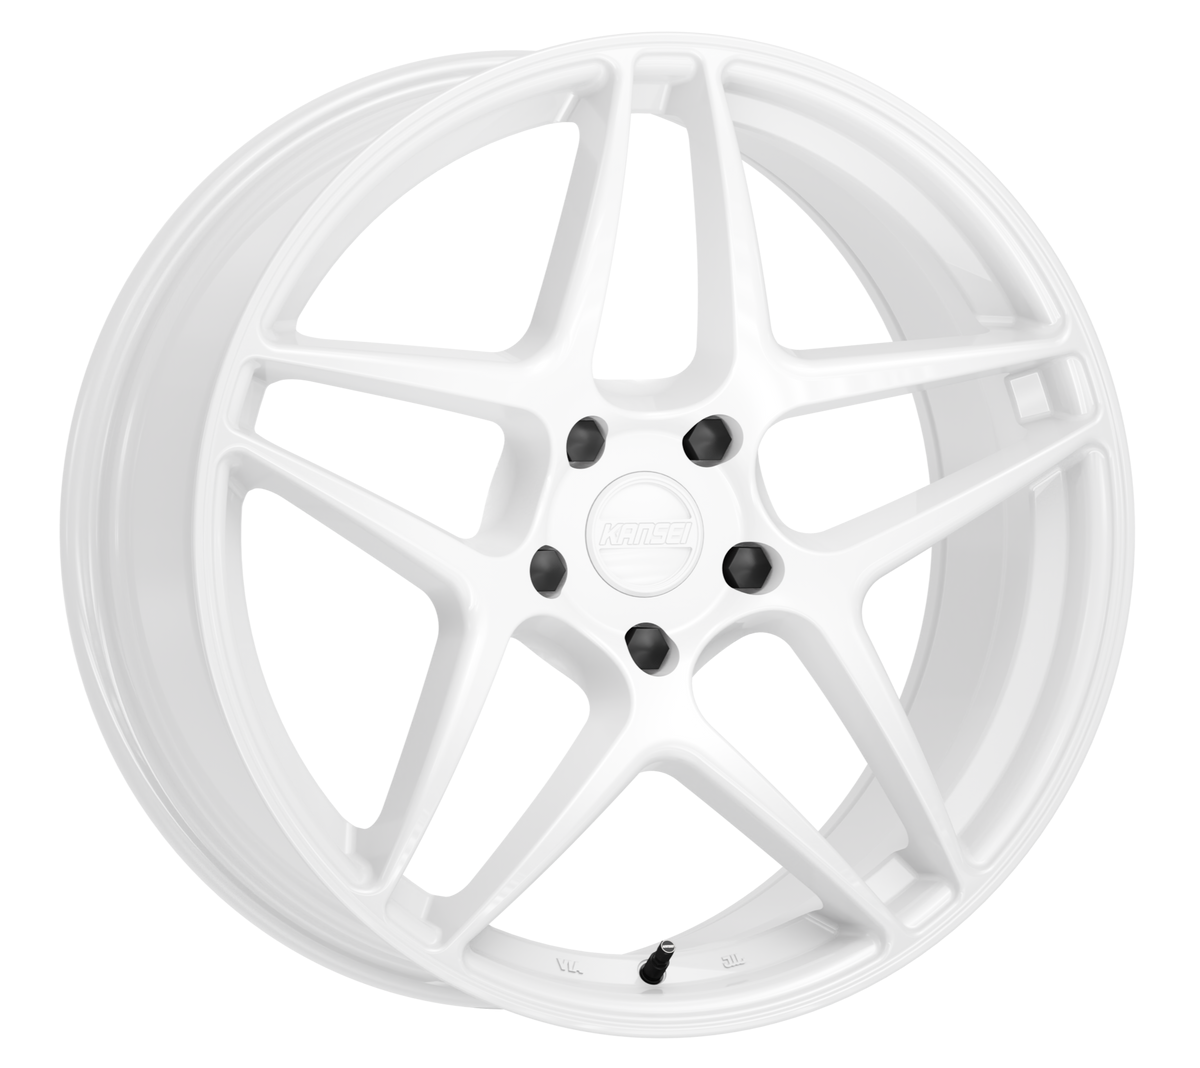 K15W ASTRO Wheel, Size: 19" x 9.50", Bolt Pattern: 5 x 112 mm, Backspace: 6.63" [Finish: Gloss White]